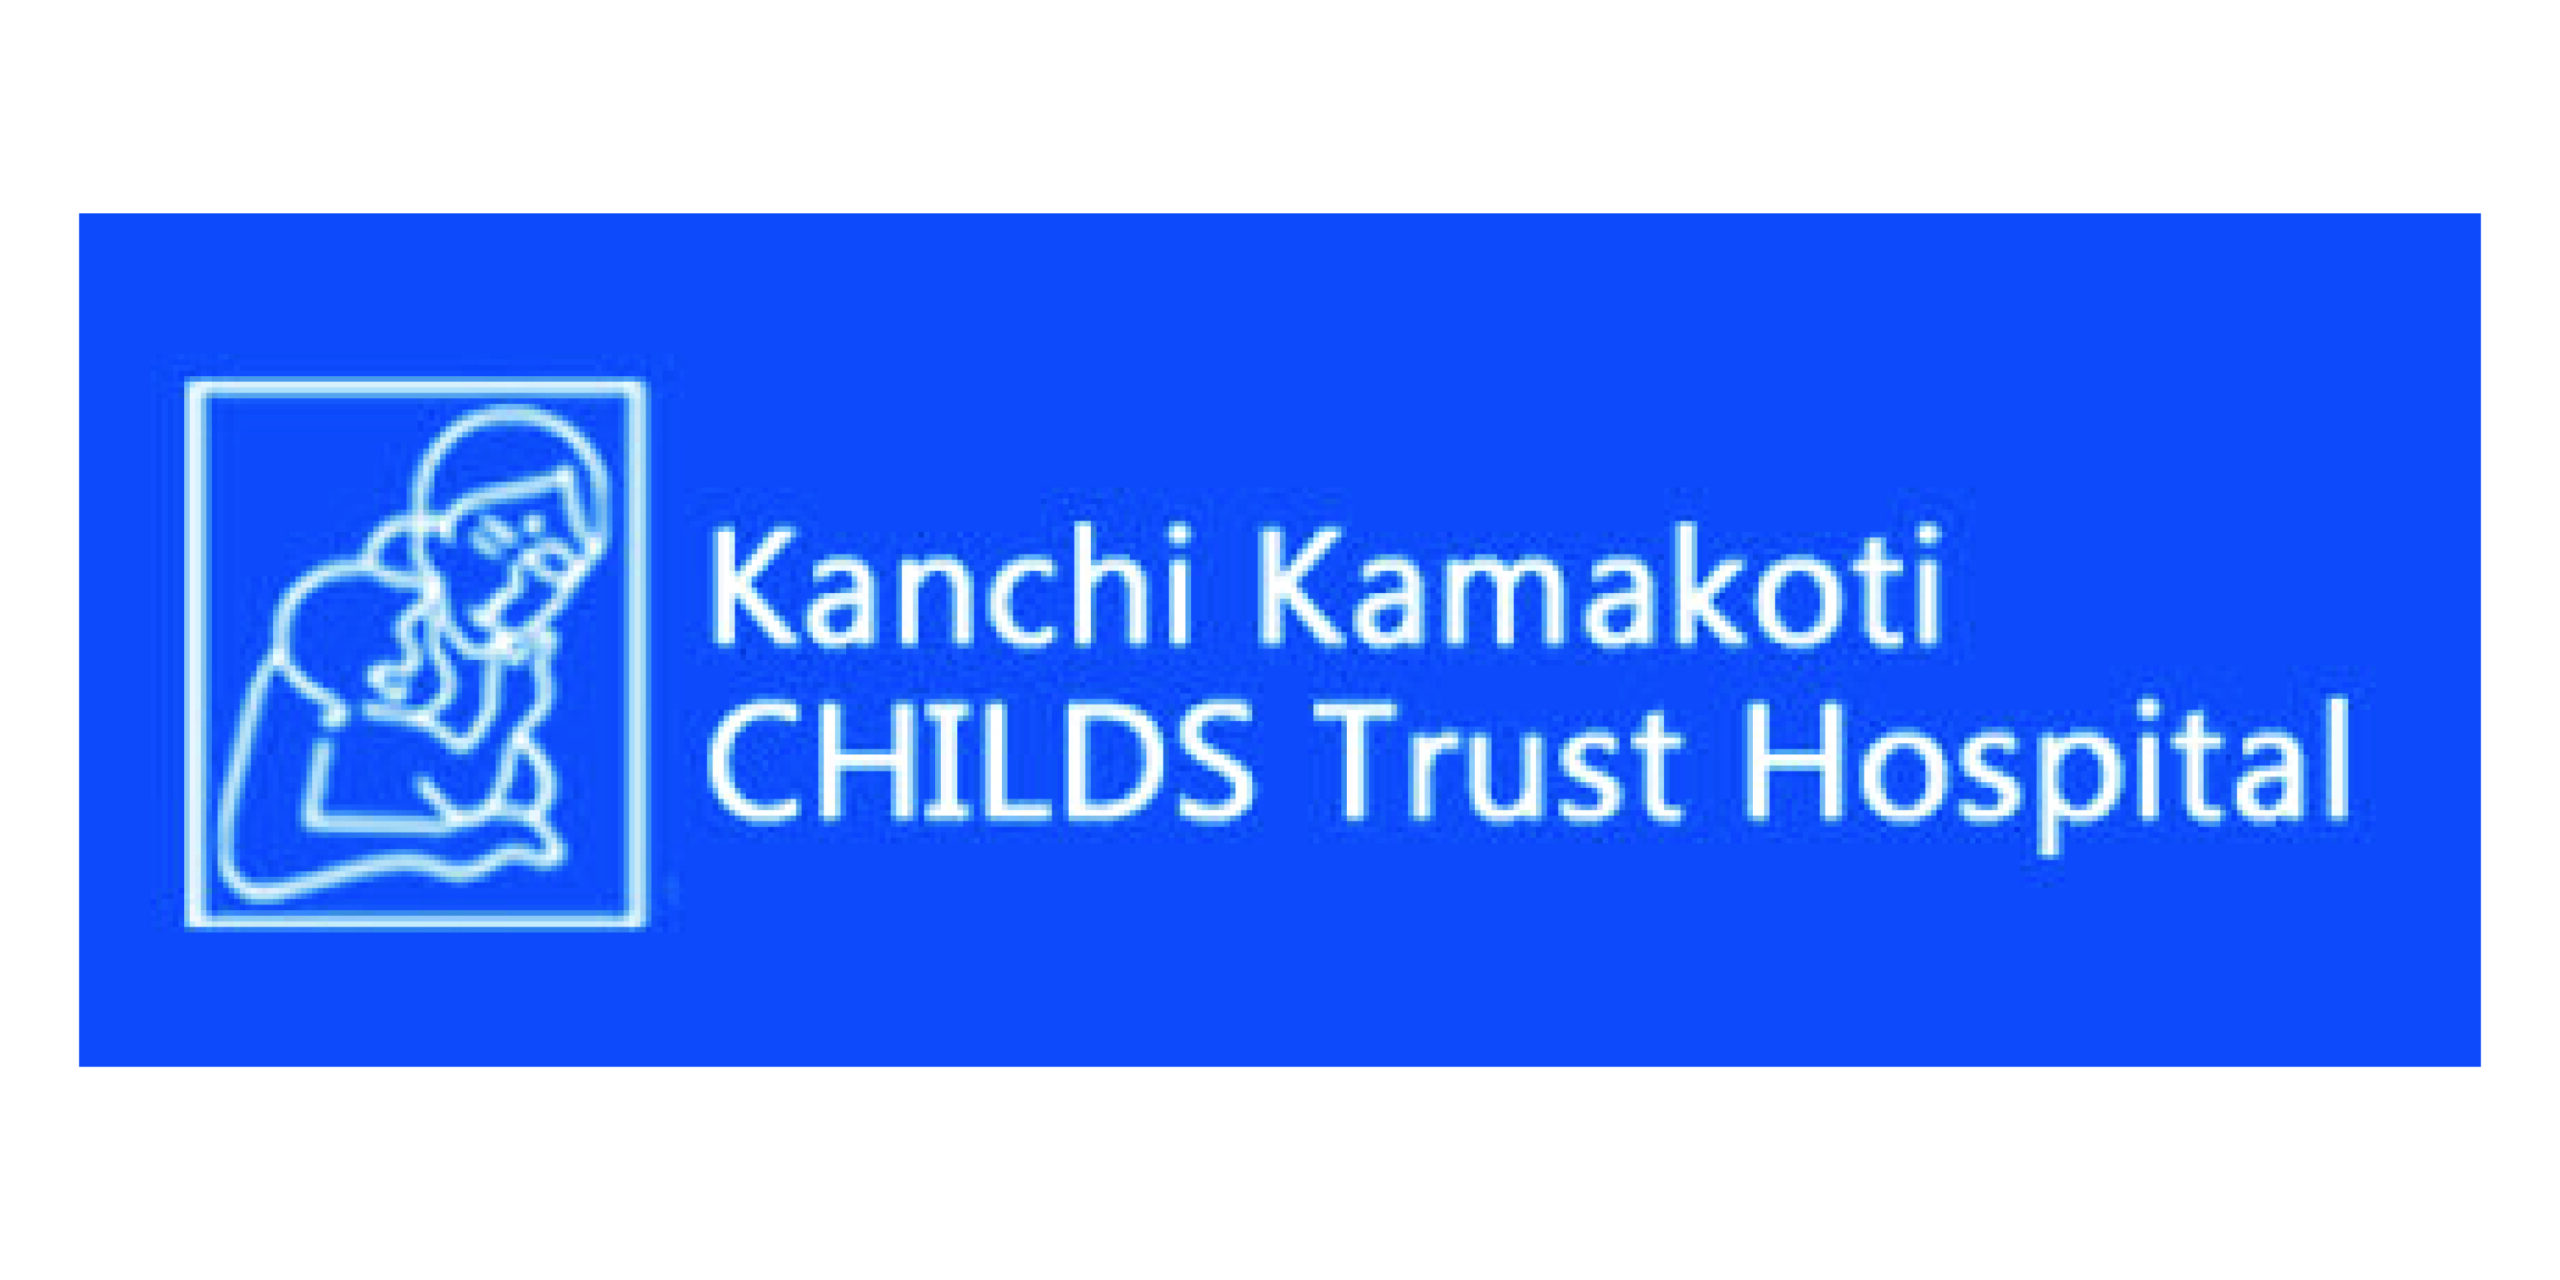 Brand logo of Kanchi Kamakoti CHILDS Trust Hospital.